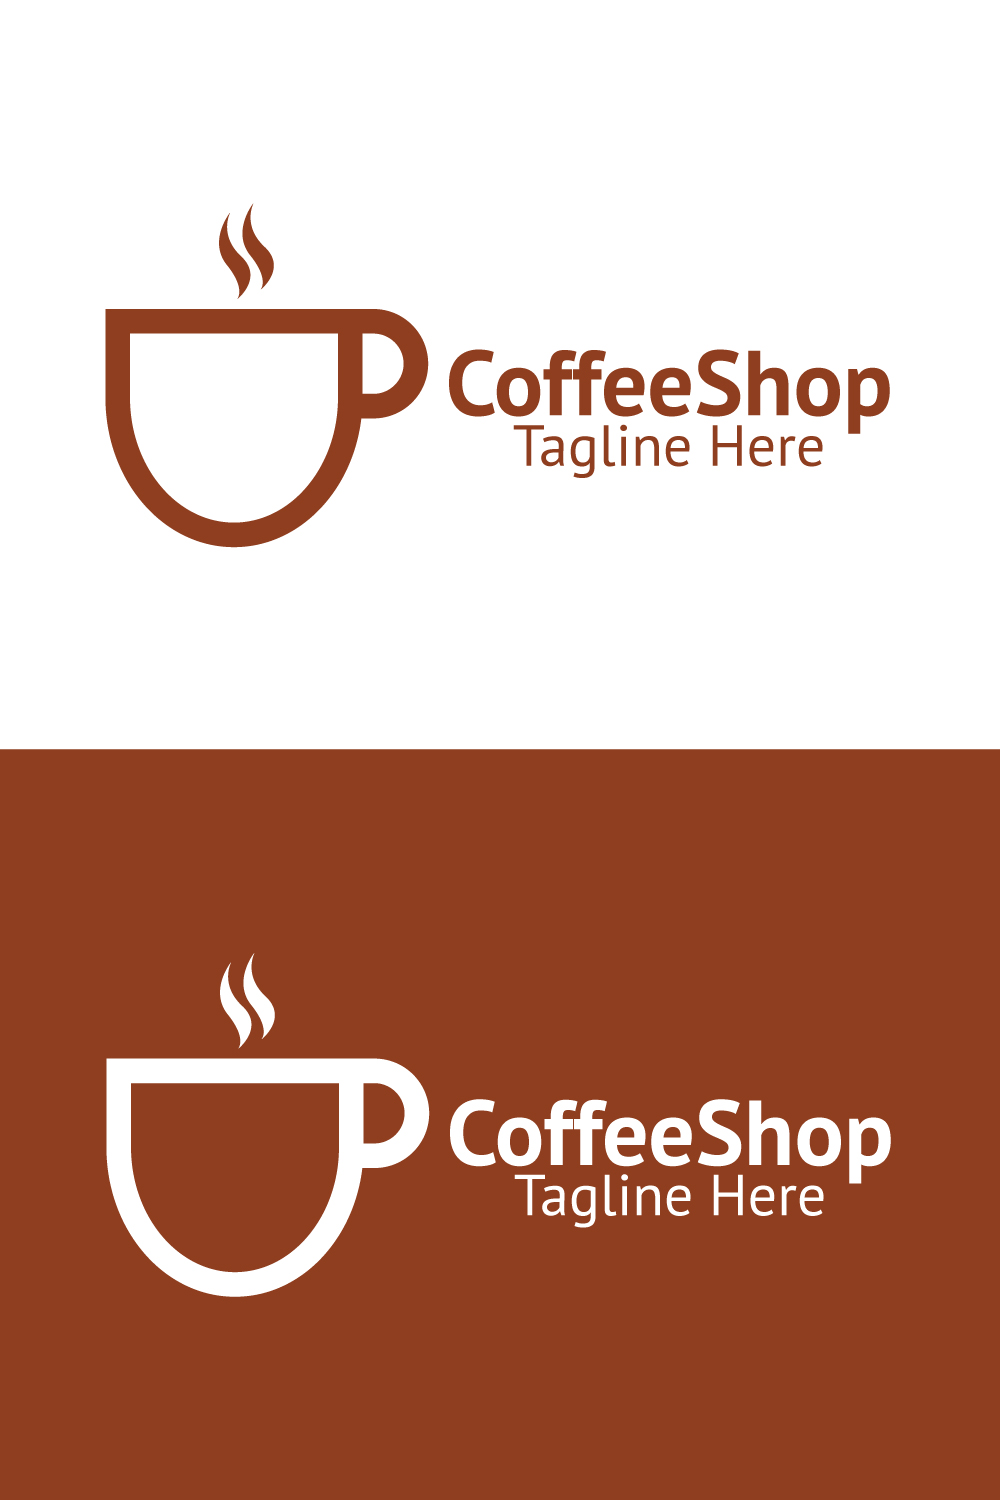 Professional Coffee logo & Coffee Shop logo design pinterest preview image.